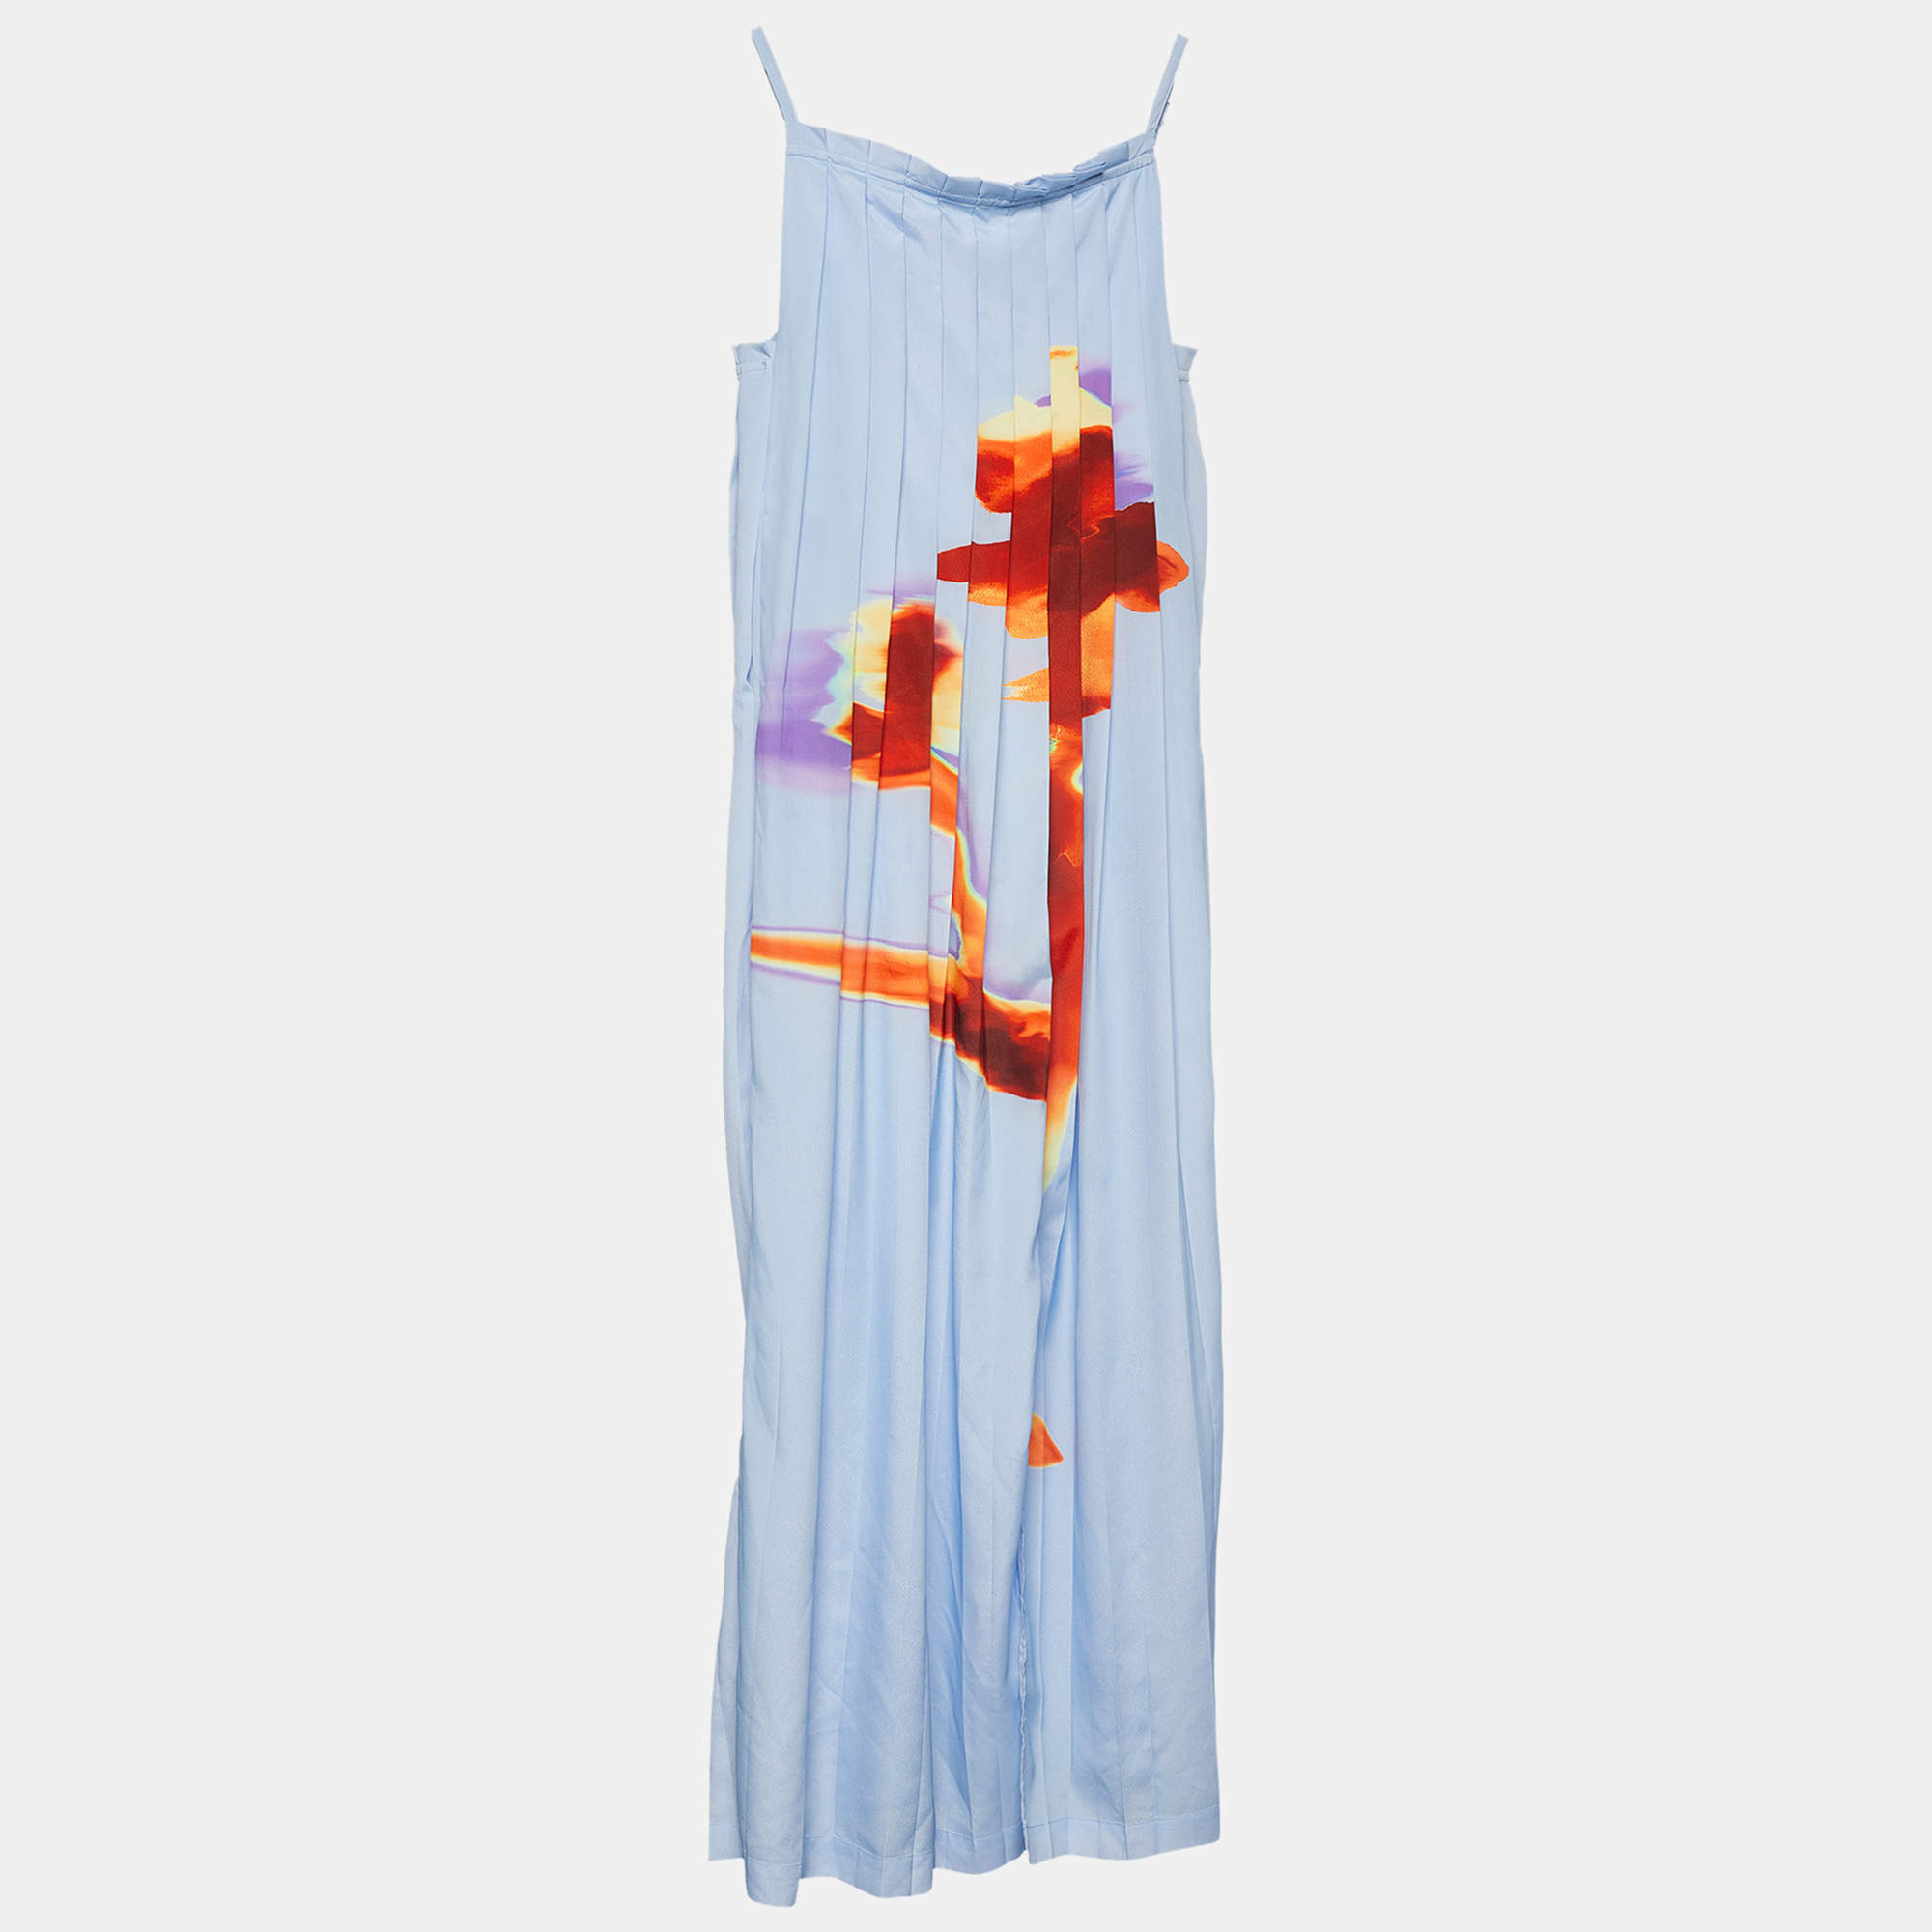 Sportmax Blue Crepe Pleated Floral Print Slip Dress S